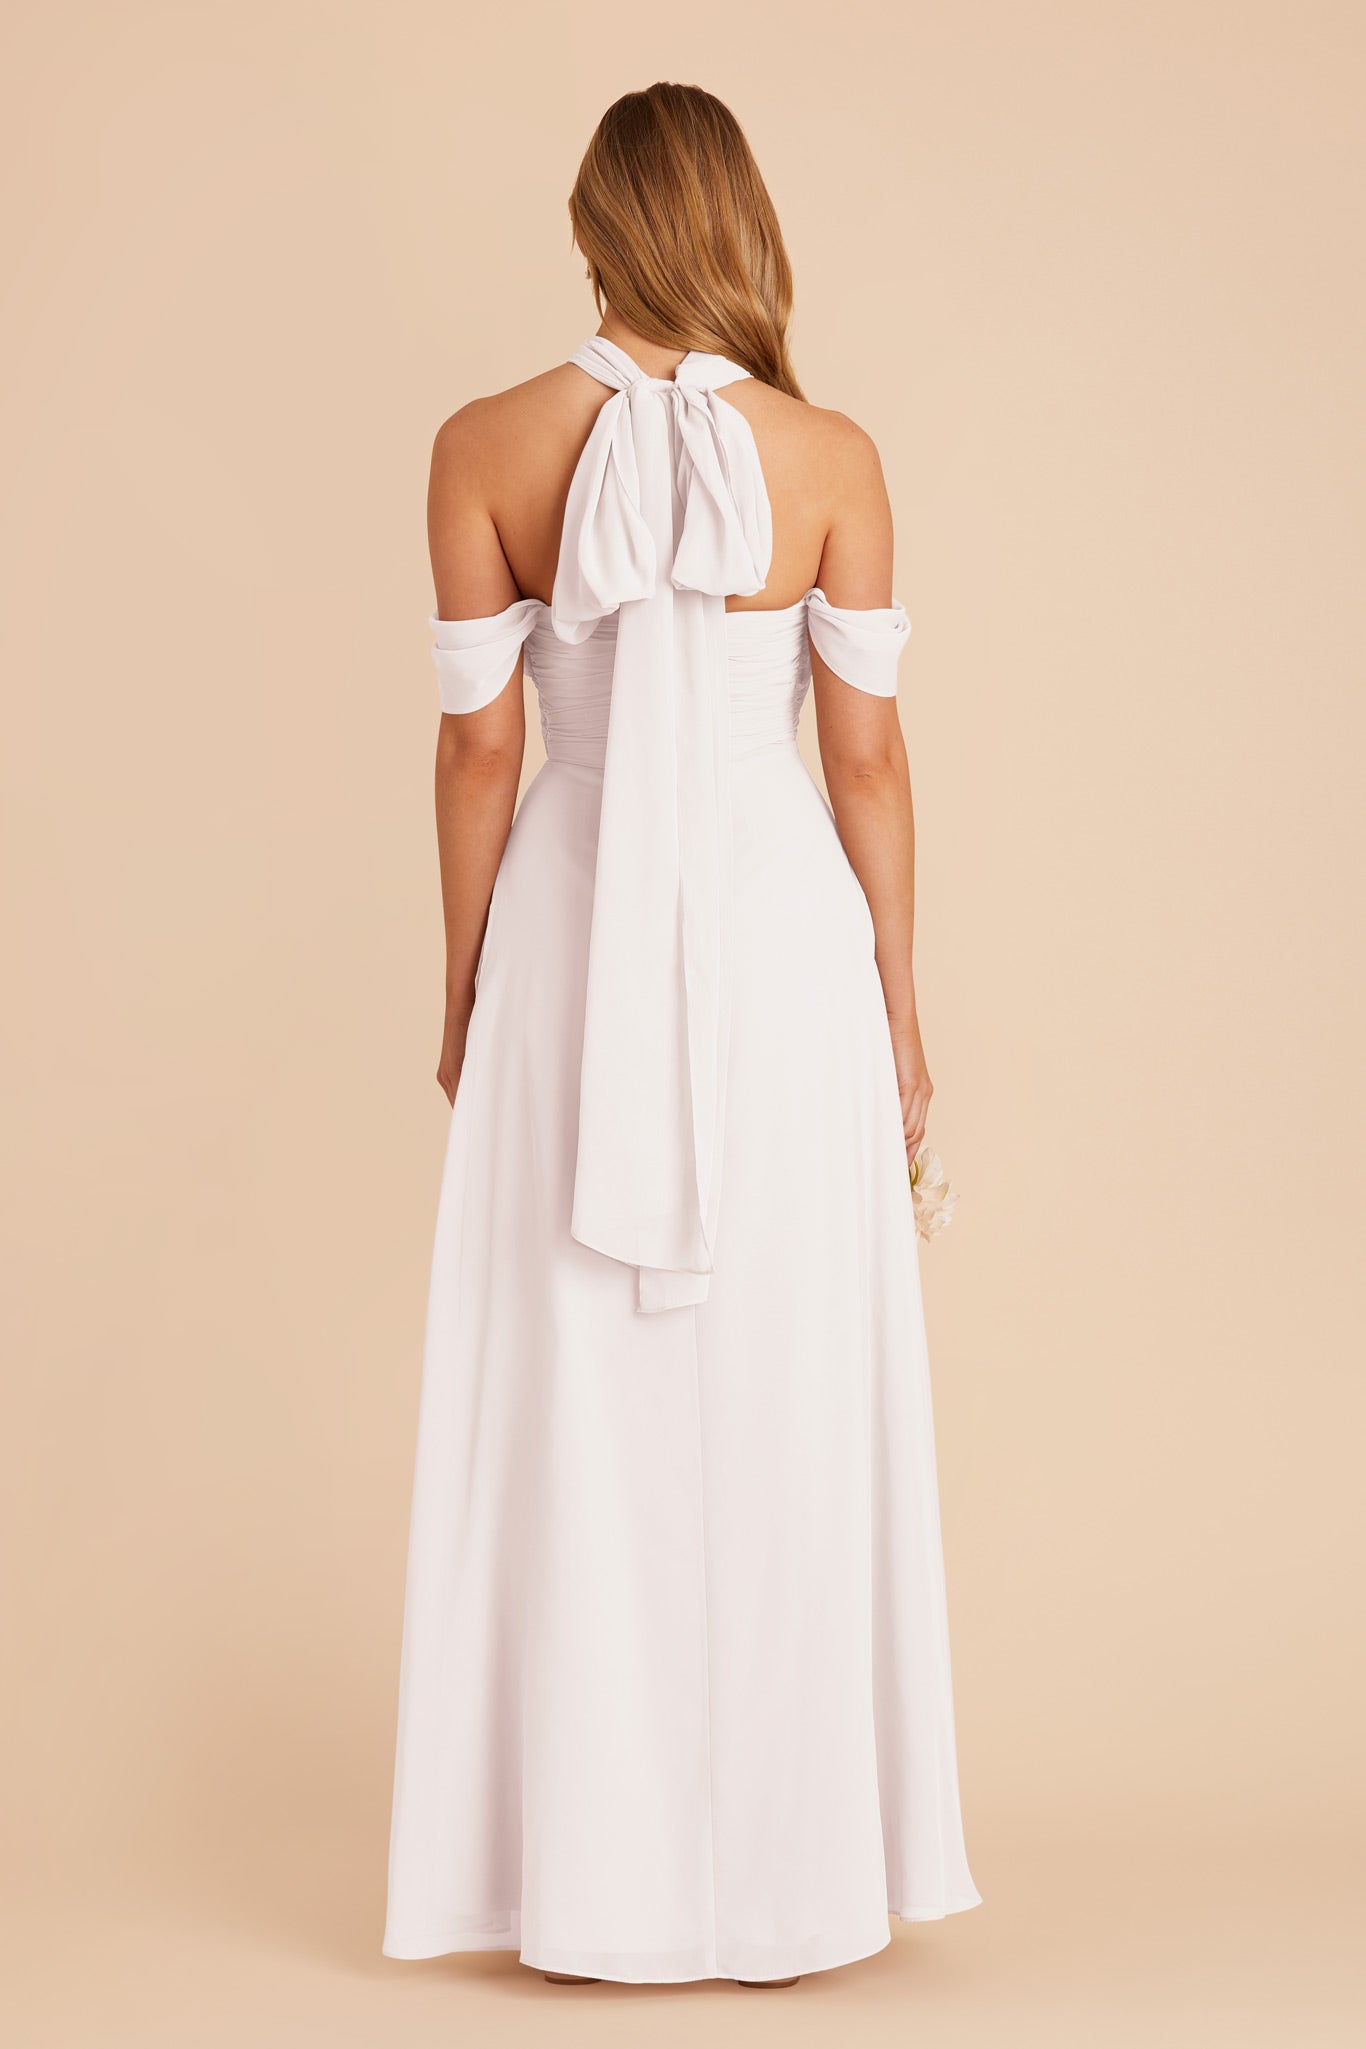 White Cara Chiffon Dress by Birdy Grey